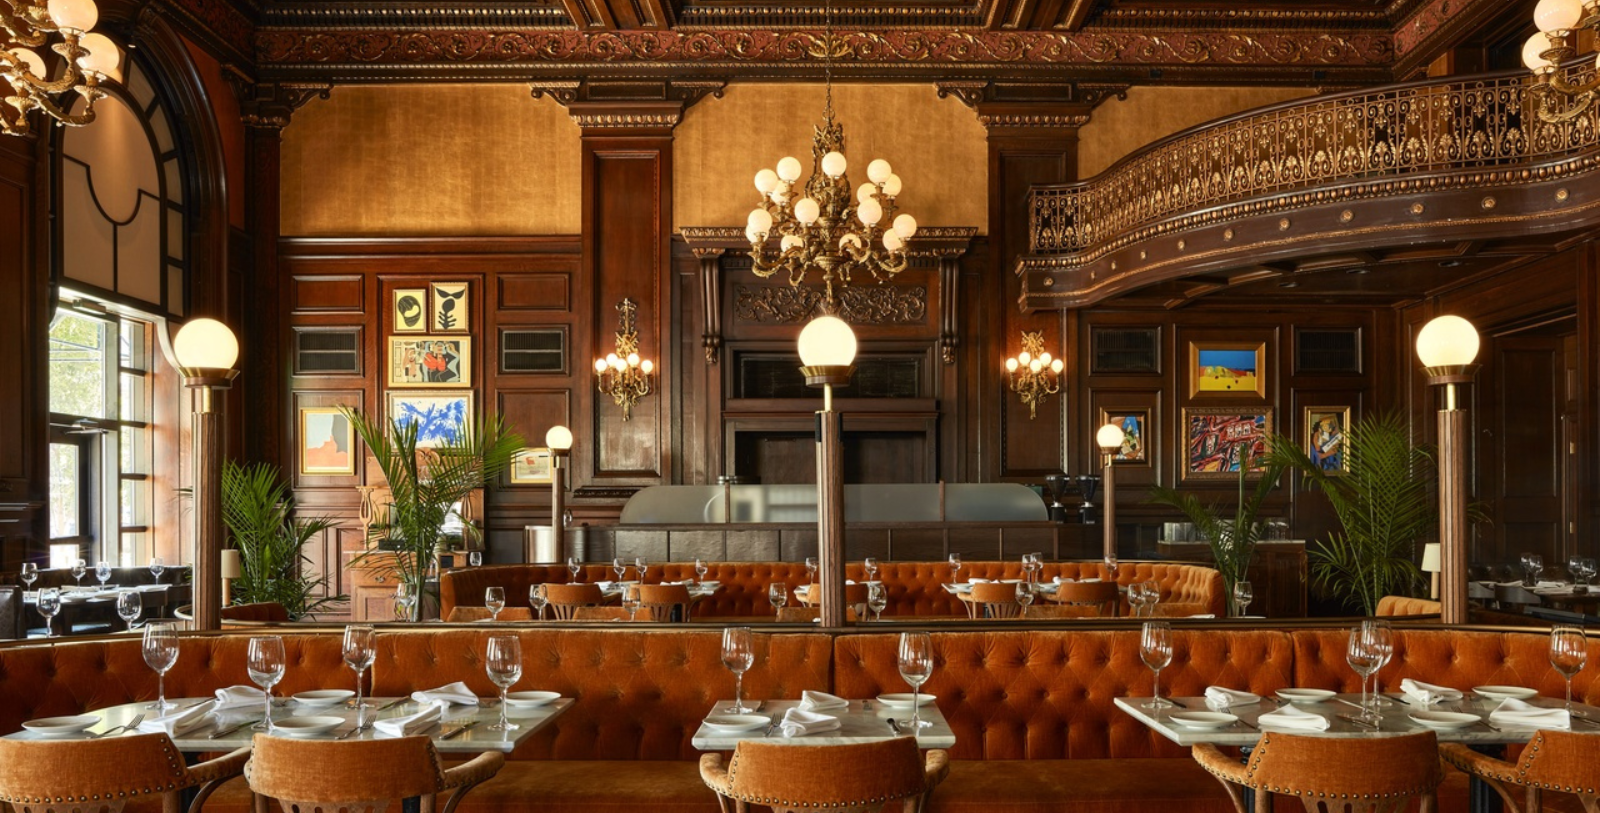 Image of Green room dining room HOTEL DU PONT, 1913, Member of Historic Hotels of America, in Wilmington, Delaware, Taste